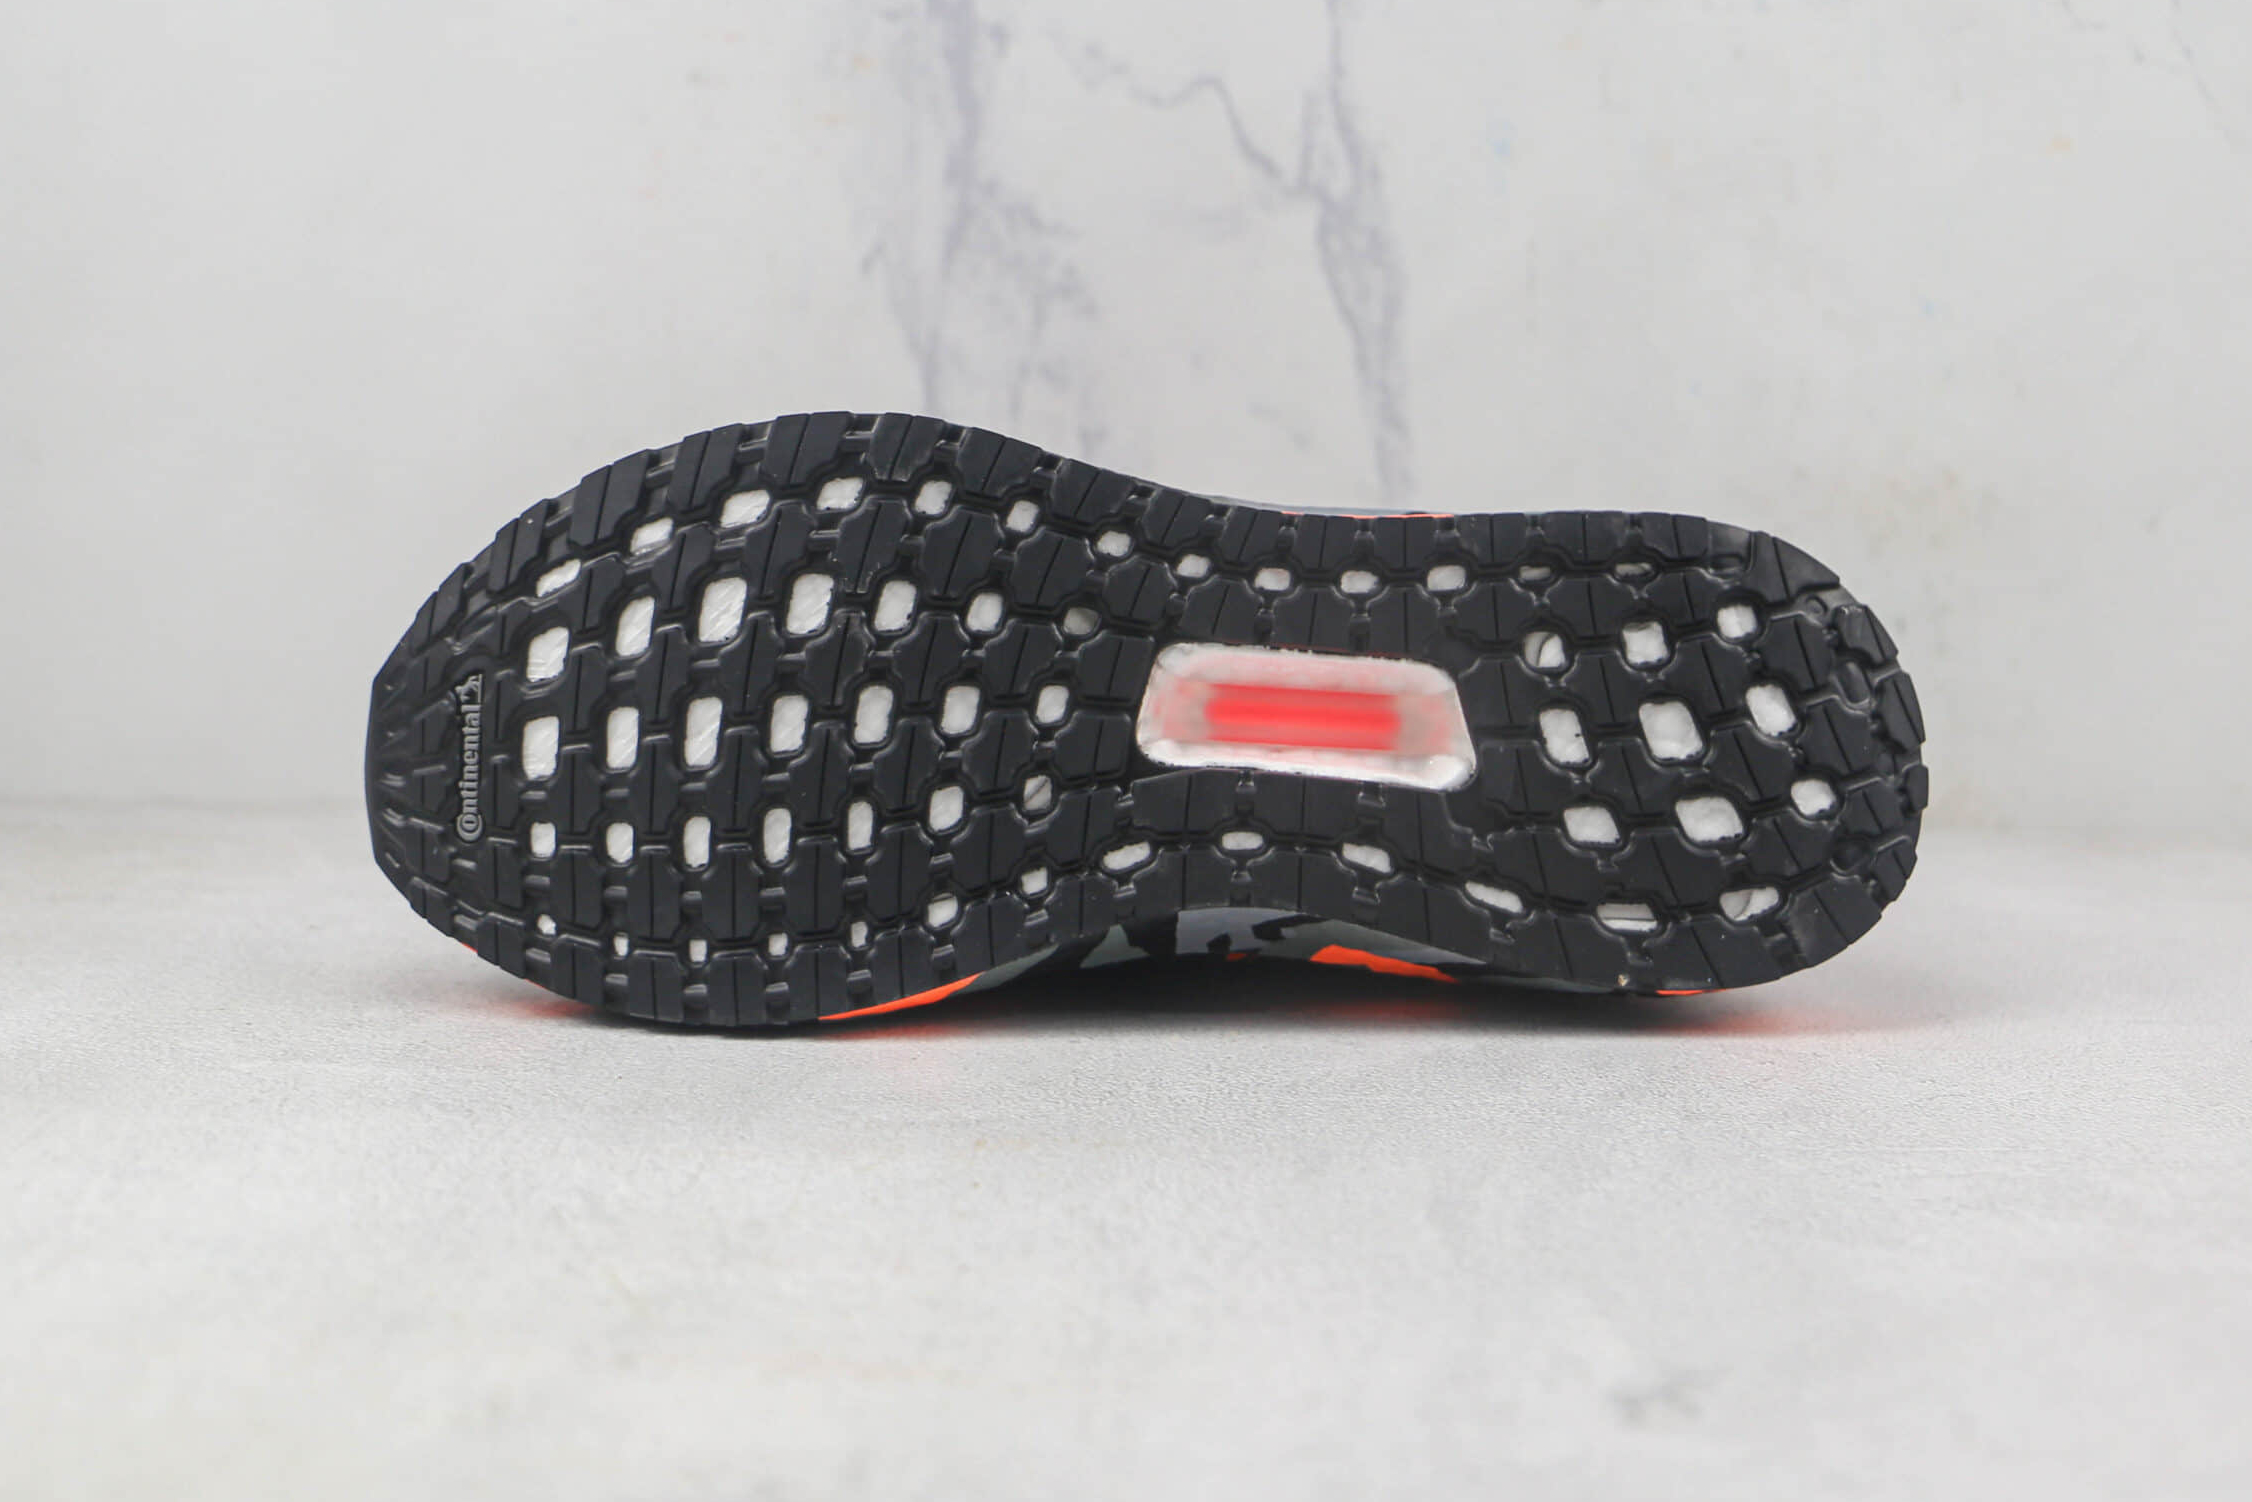 Adidas UltraBoost 20 'Geometric Pack - Black Signal Orange' FV8330